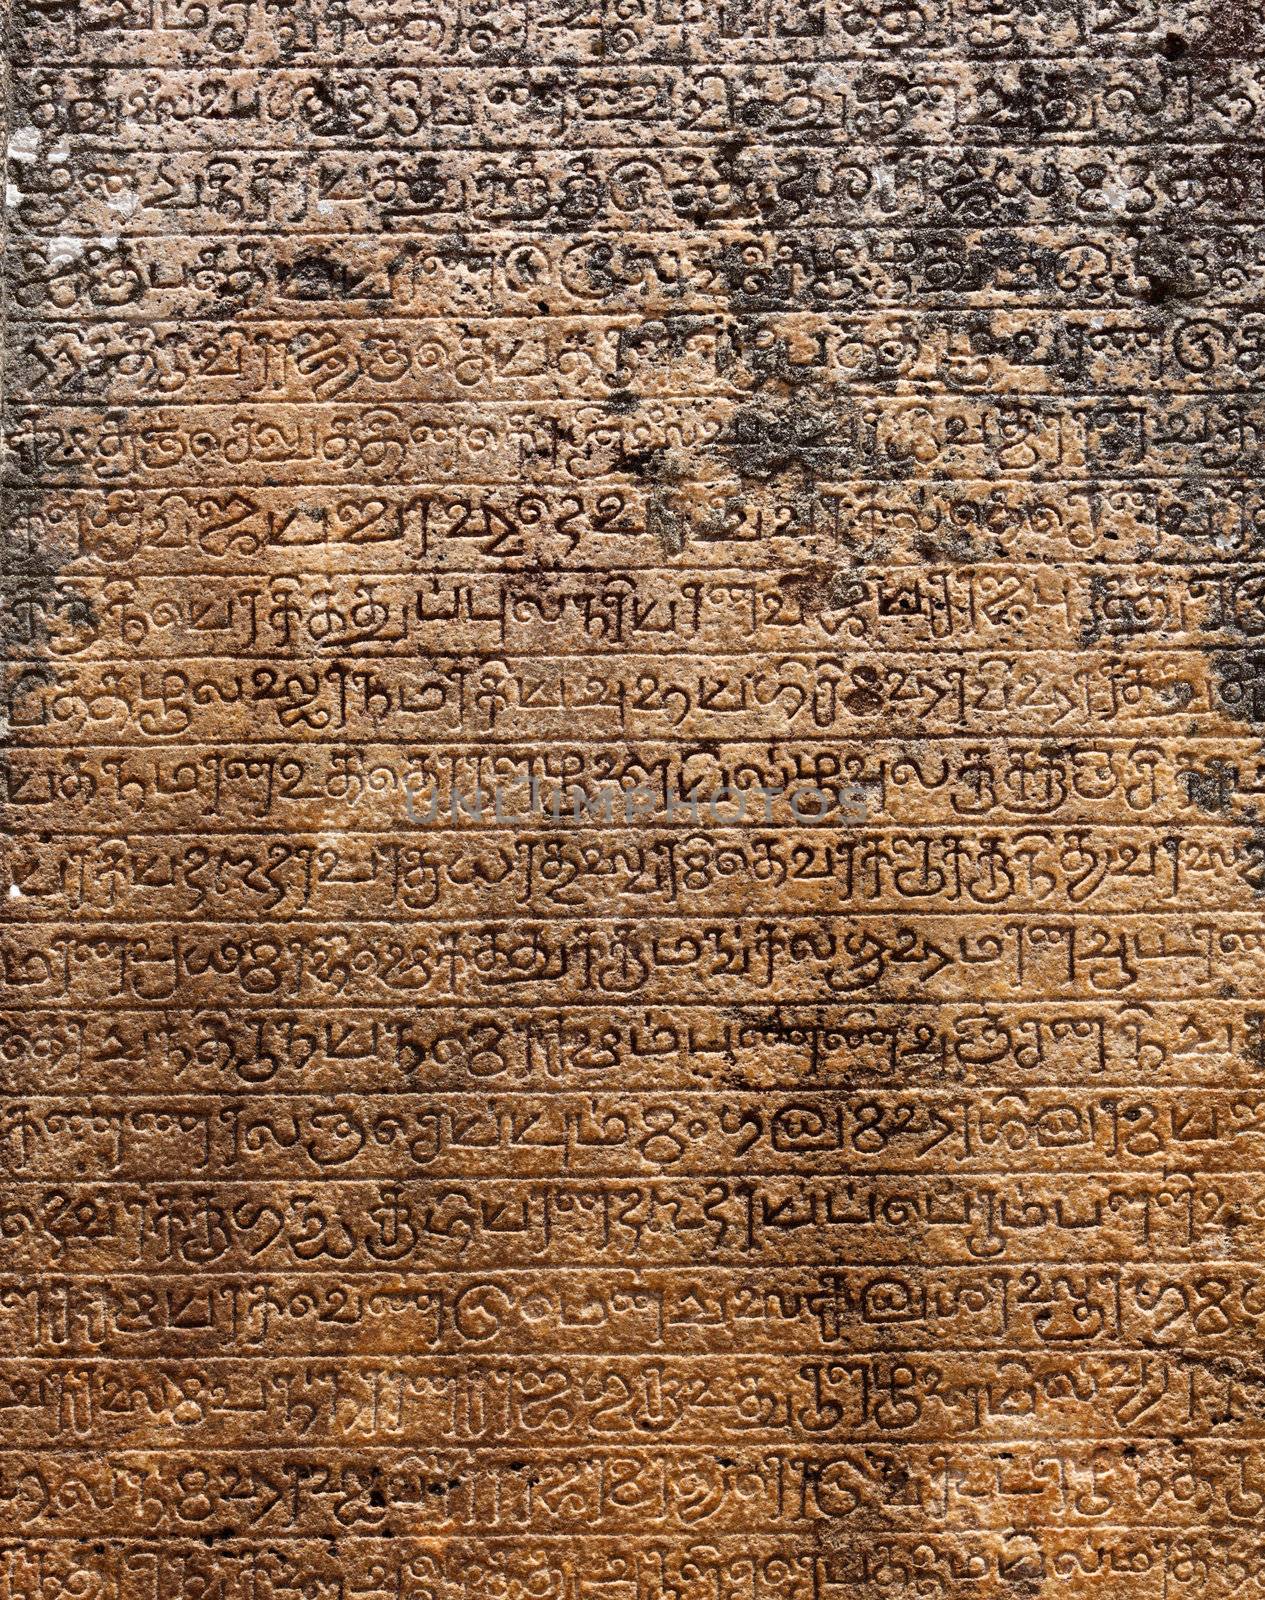 Ancient stone inscriptions in Singalese language texture. Pollonaruwa, Sri Lanka